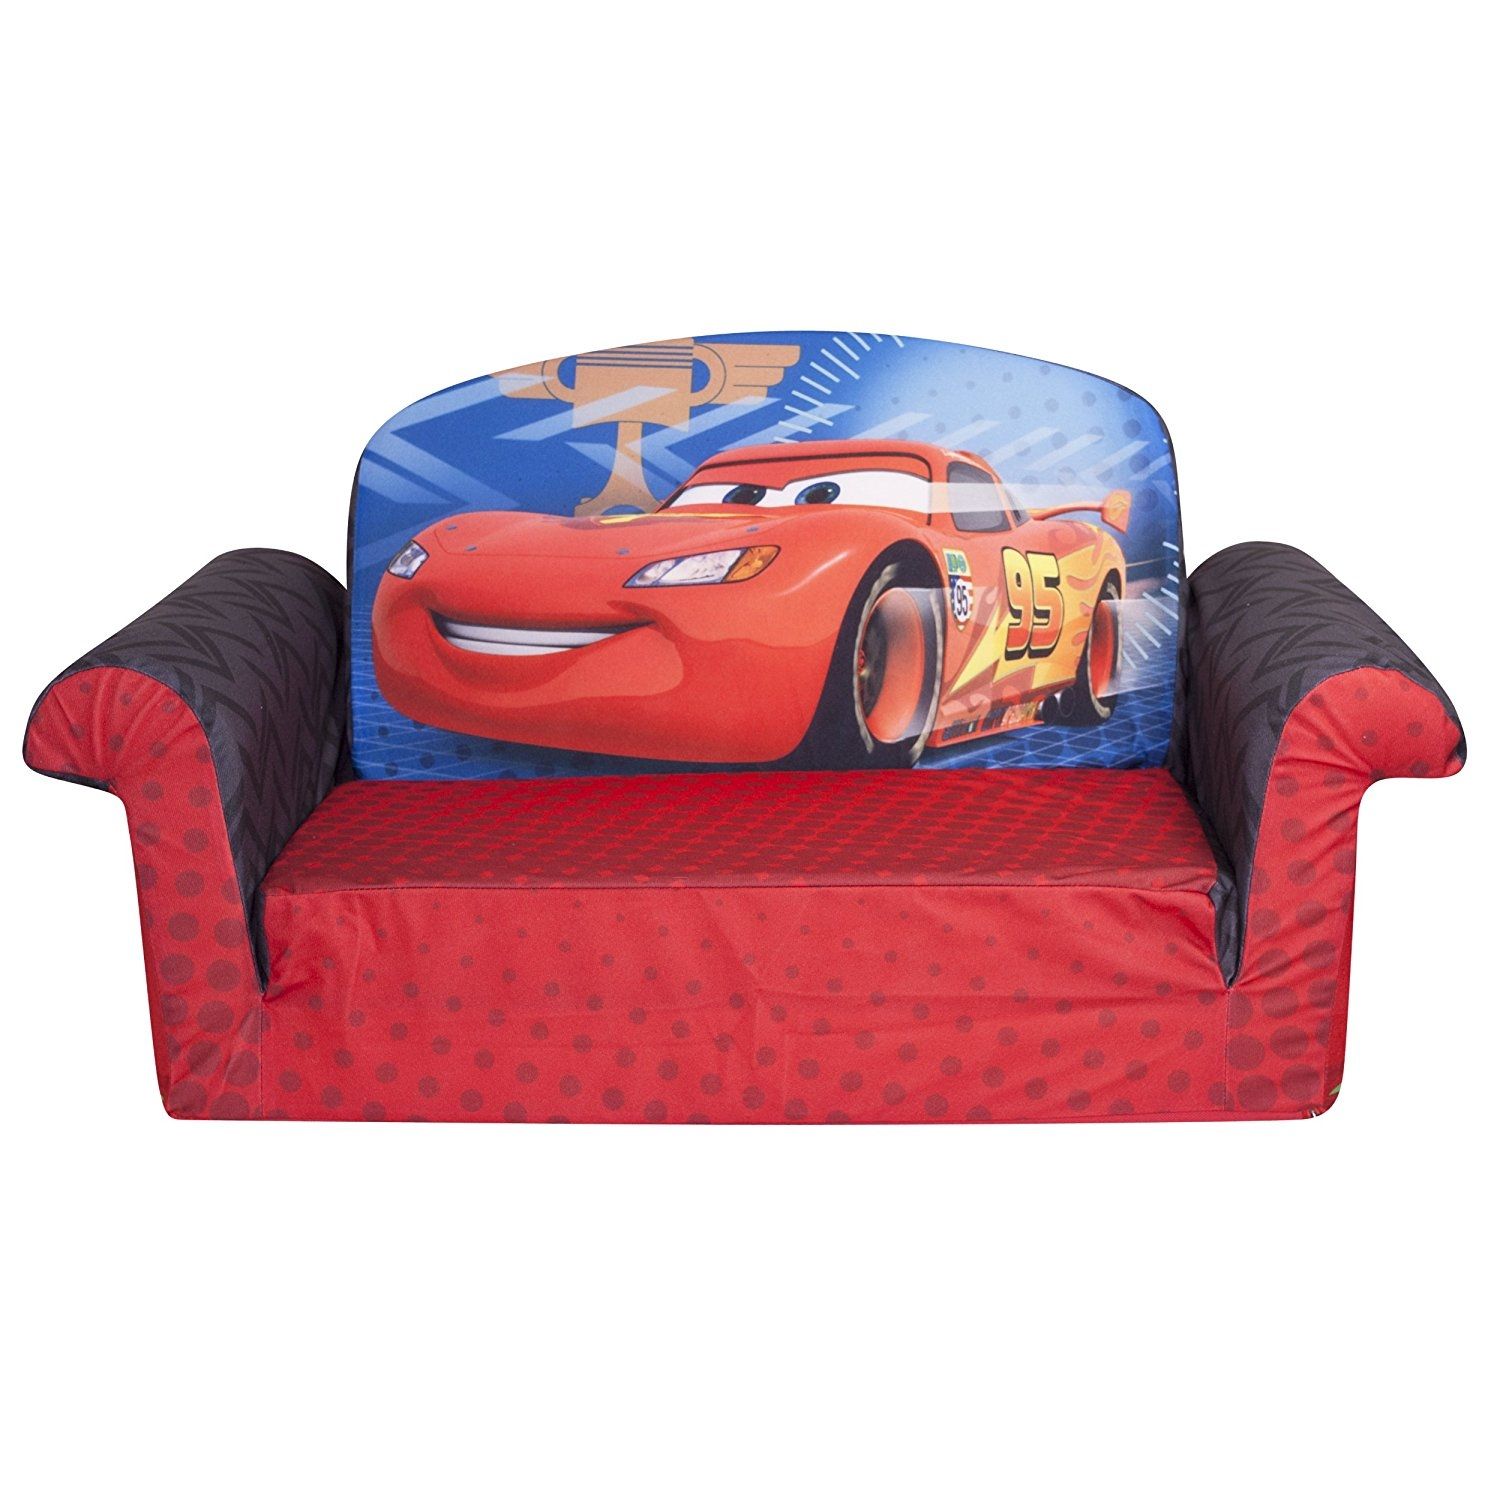 Kids Sofas Amazon With Disney Sofa Chairs (View 3 of 15)